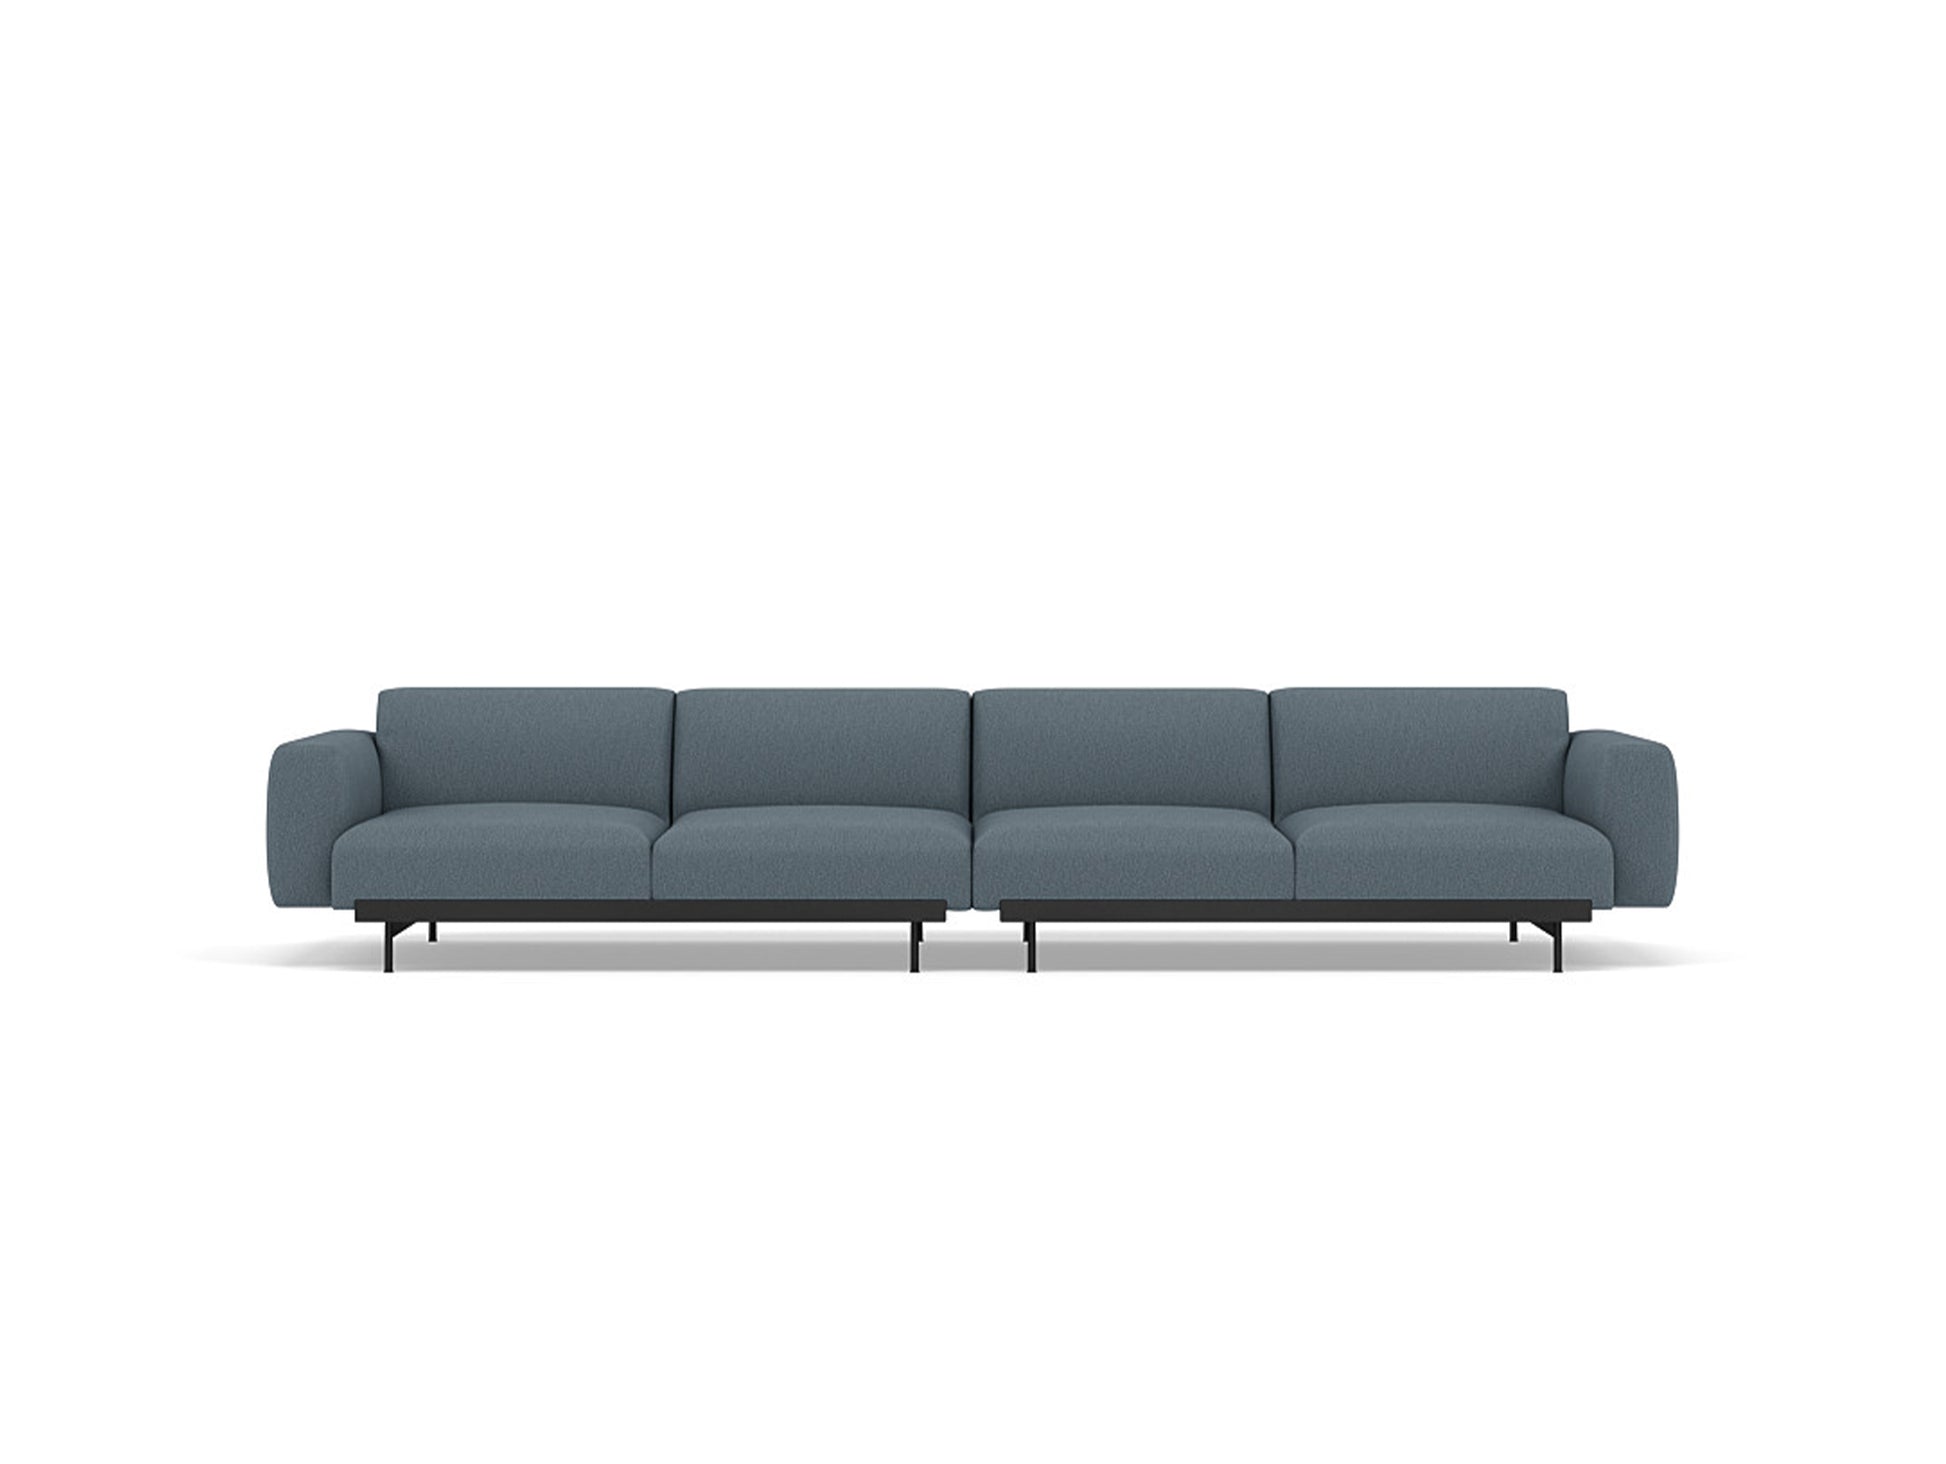 In Situ 4-Seater Modular Sofa by Muuto - Configuration 1 / Clay1